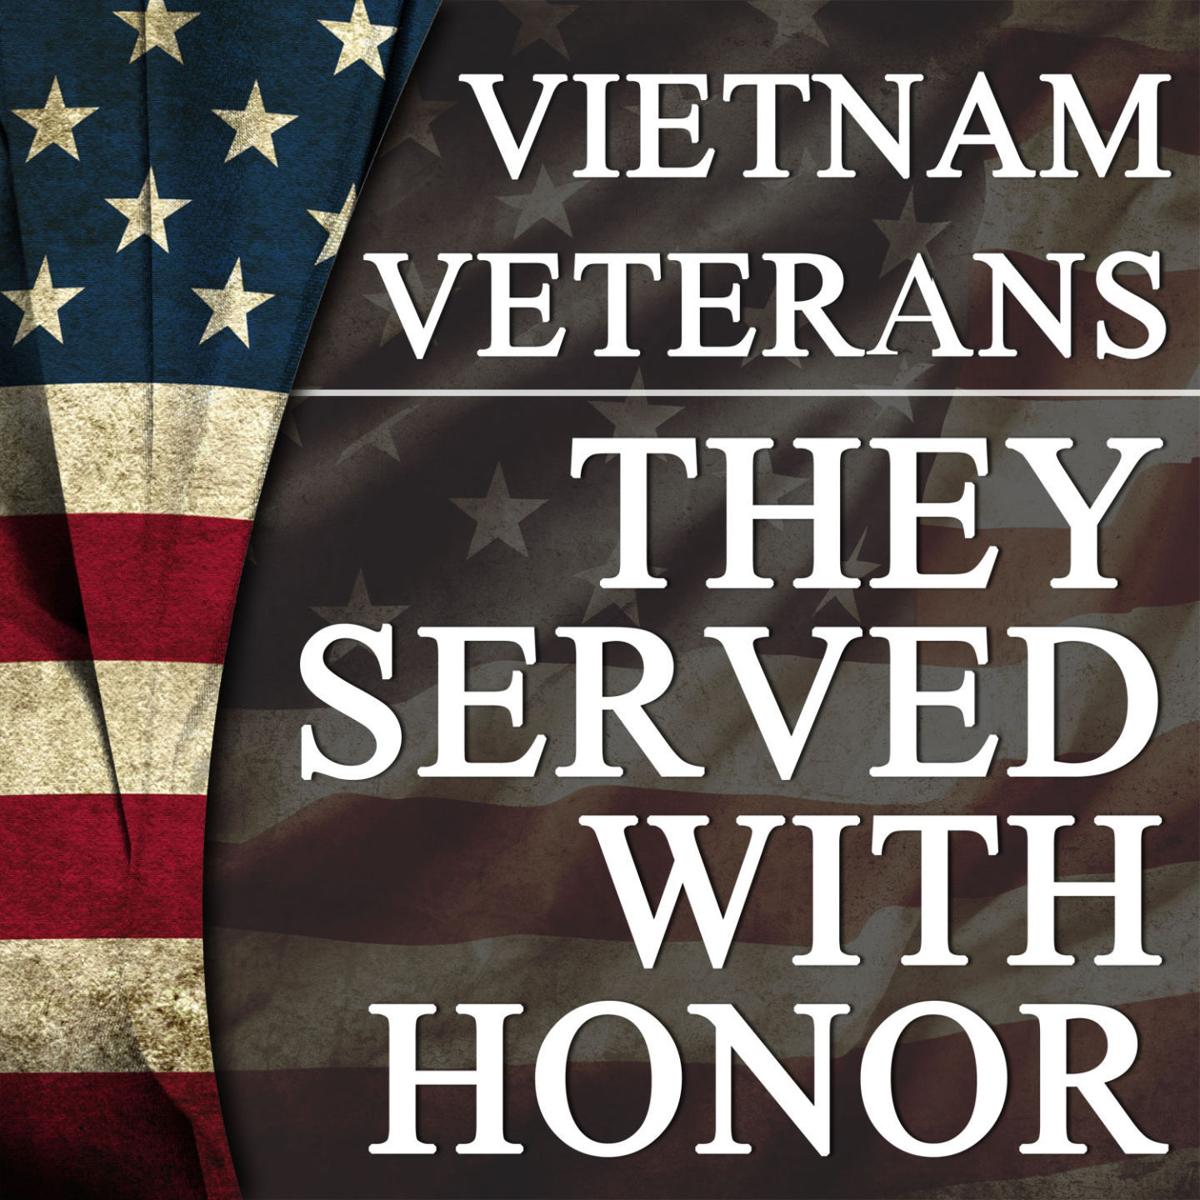 Doing our part for Vietnam veterans Editorials